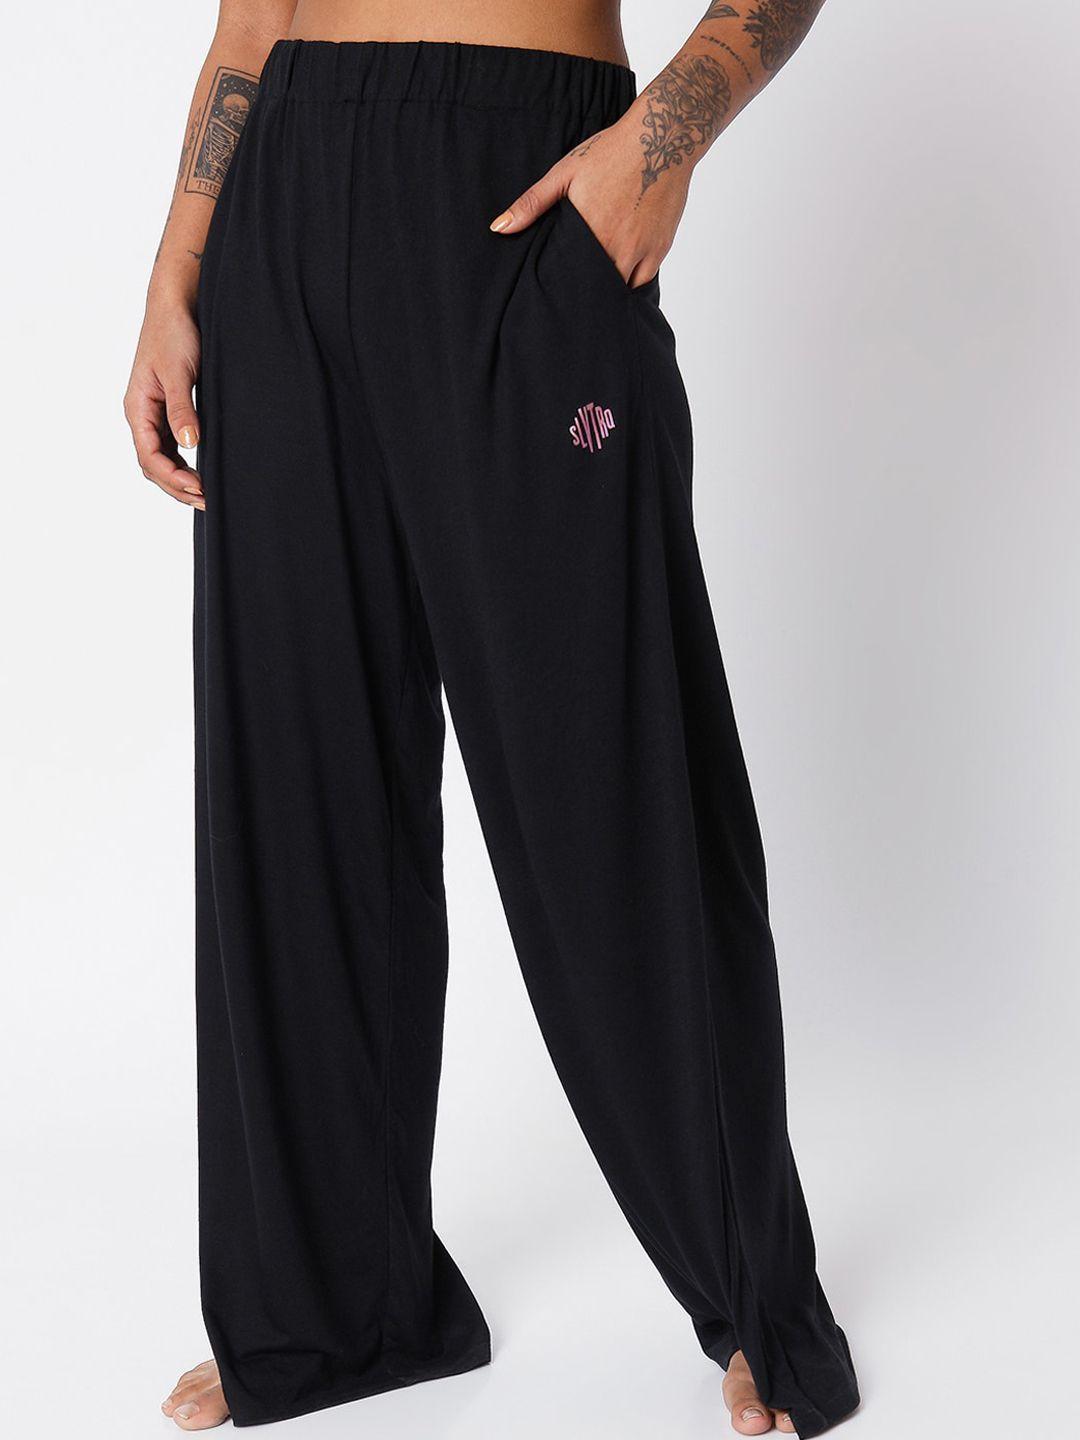 silvertraq-women-black-high-waist-modal-lounge-pants